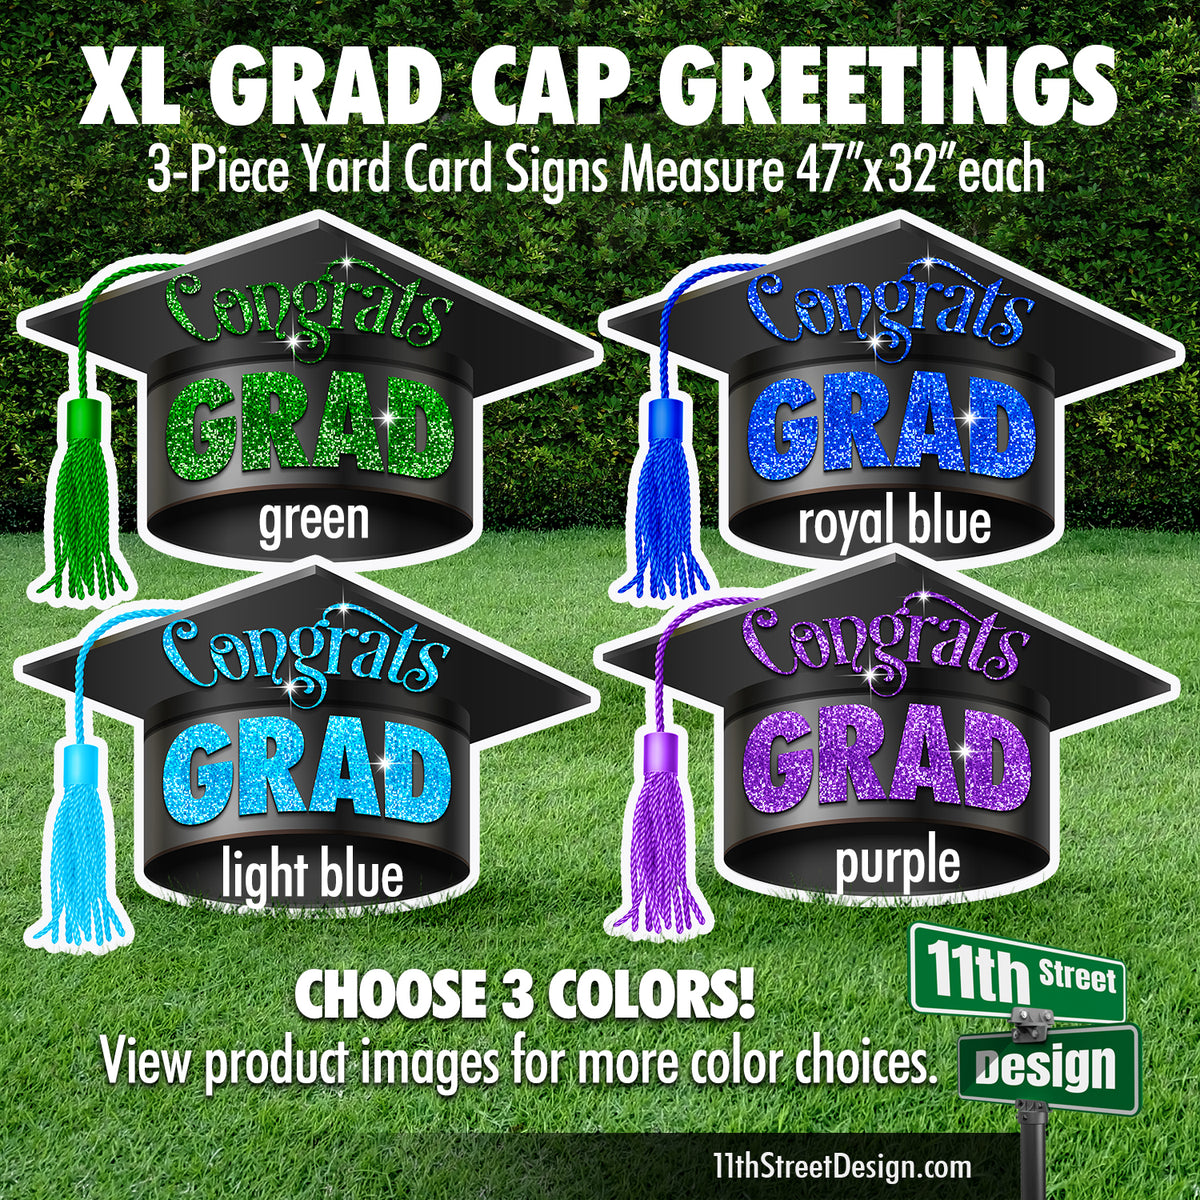 XL Grad Cap Greetings Yard Card Setup Signs for Graduations - Choose your colors!